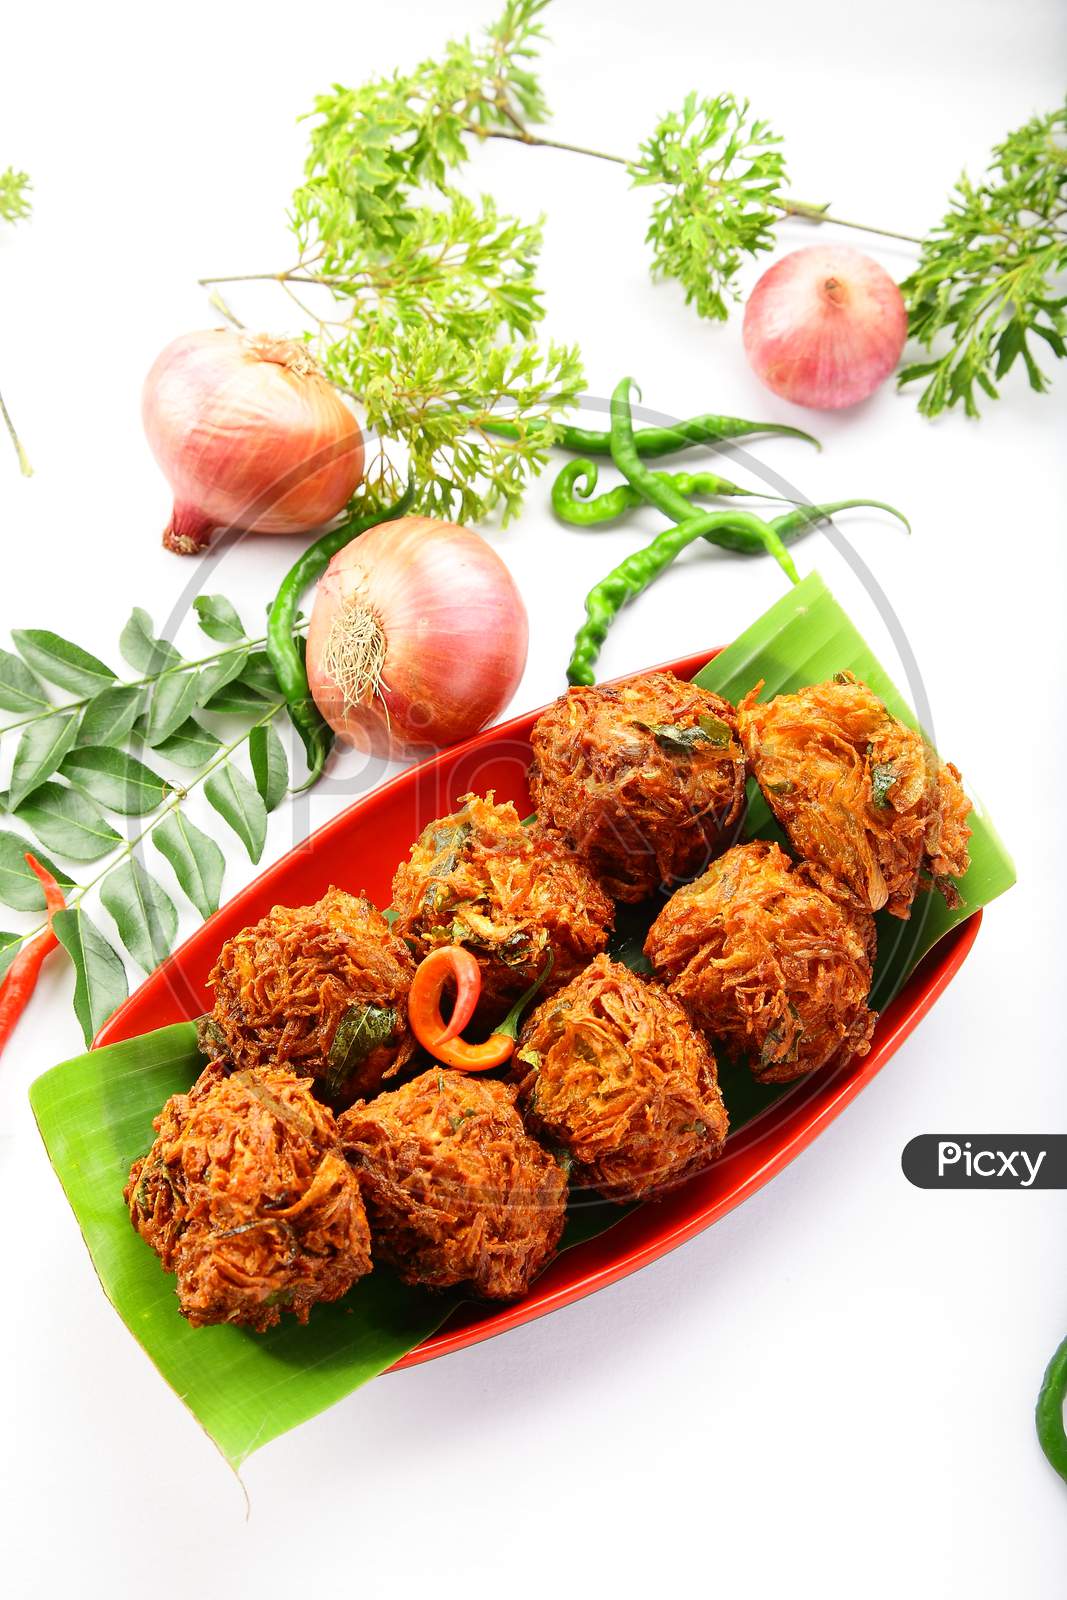 Uliivada- Kerala vegan snack food